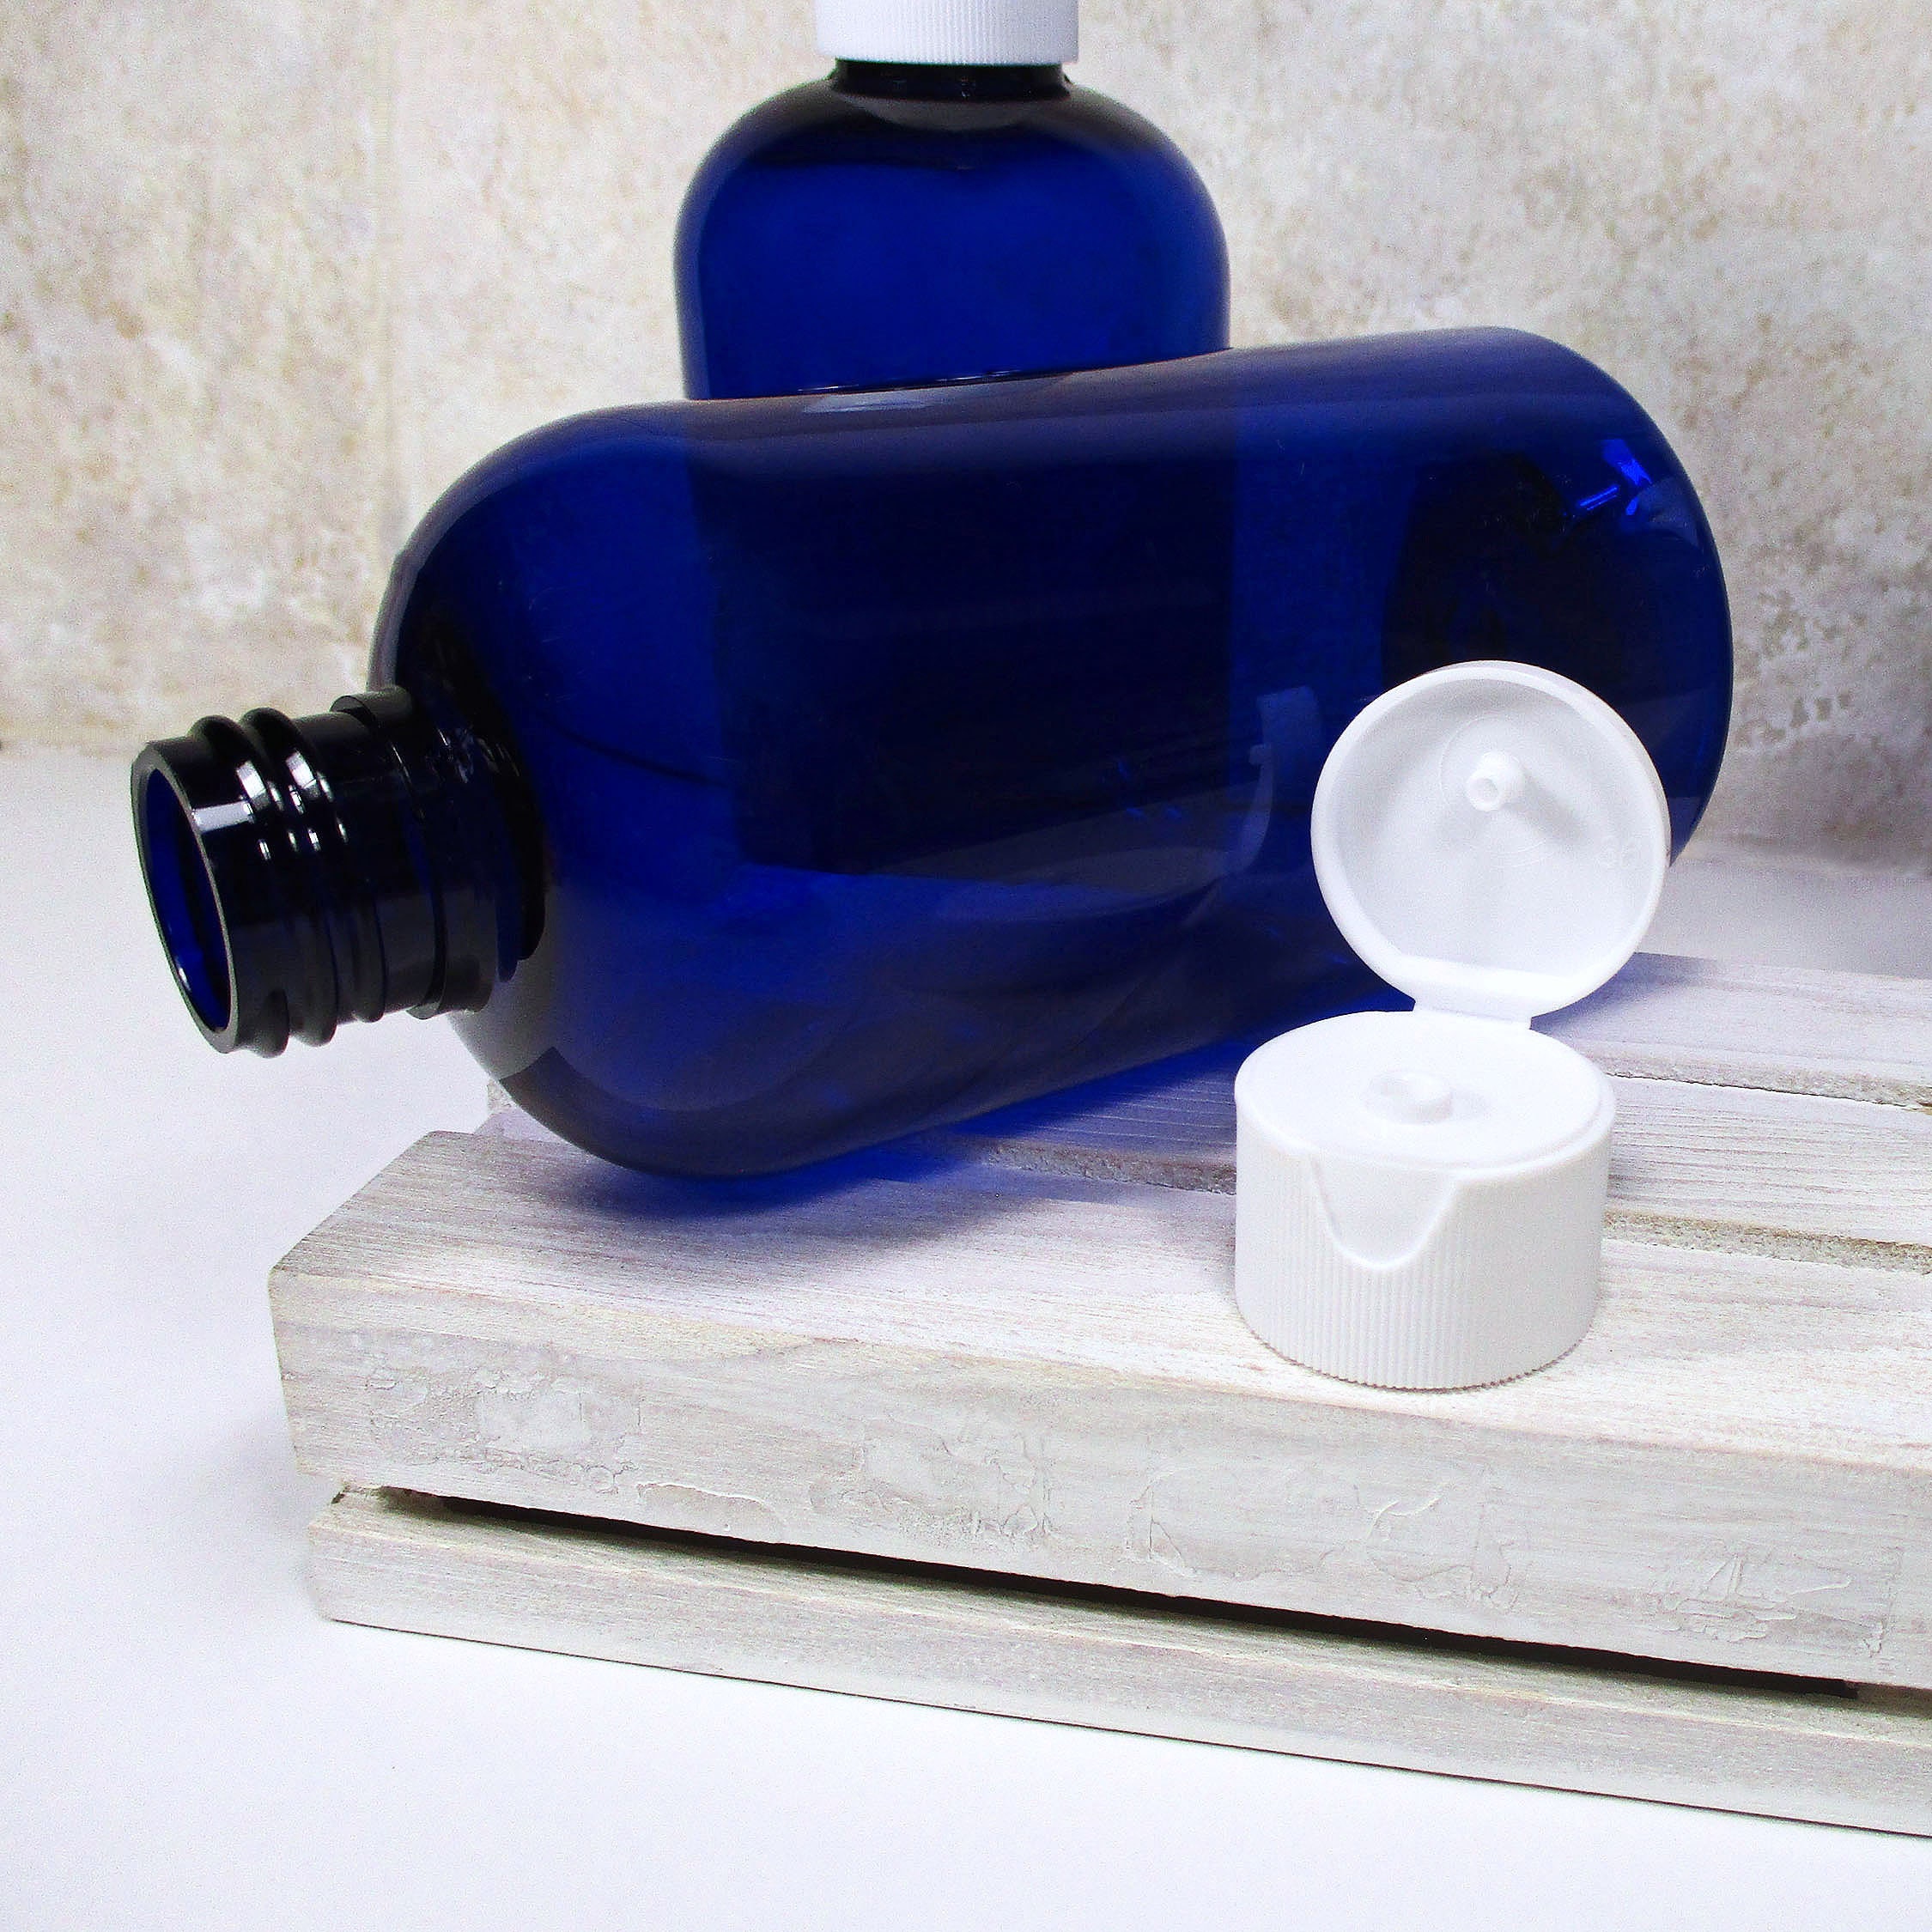 8 Oz Plastic Bottles Set of 3 Squeeze Bottles Blue Dundee Bathroom Bottles  or Squirt Bottles for Shampoo Lotion or Dish Soap Dispenser 